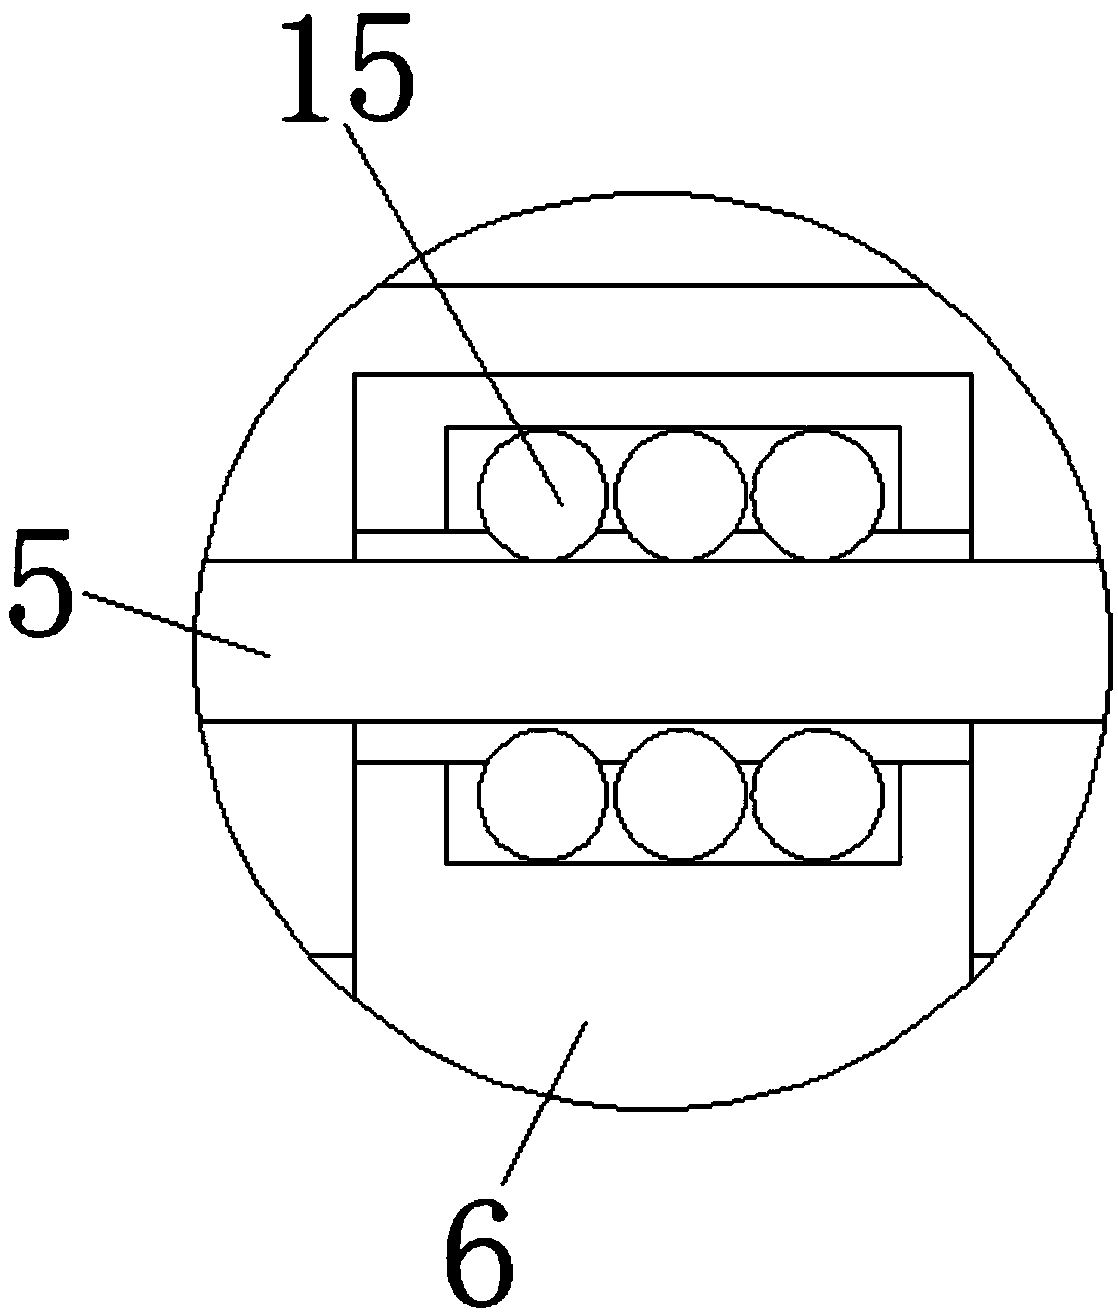 Automatic bending mechanism